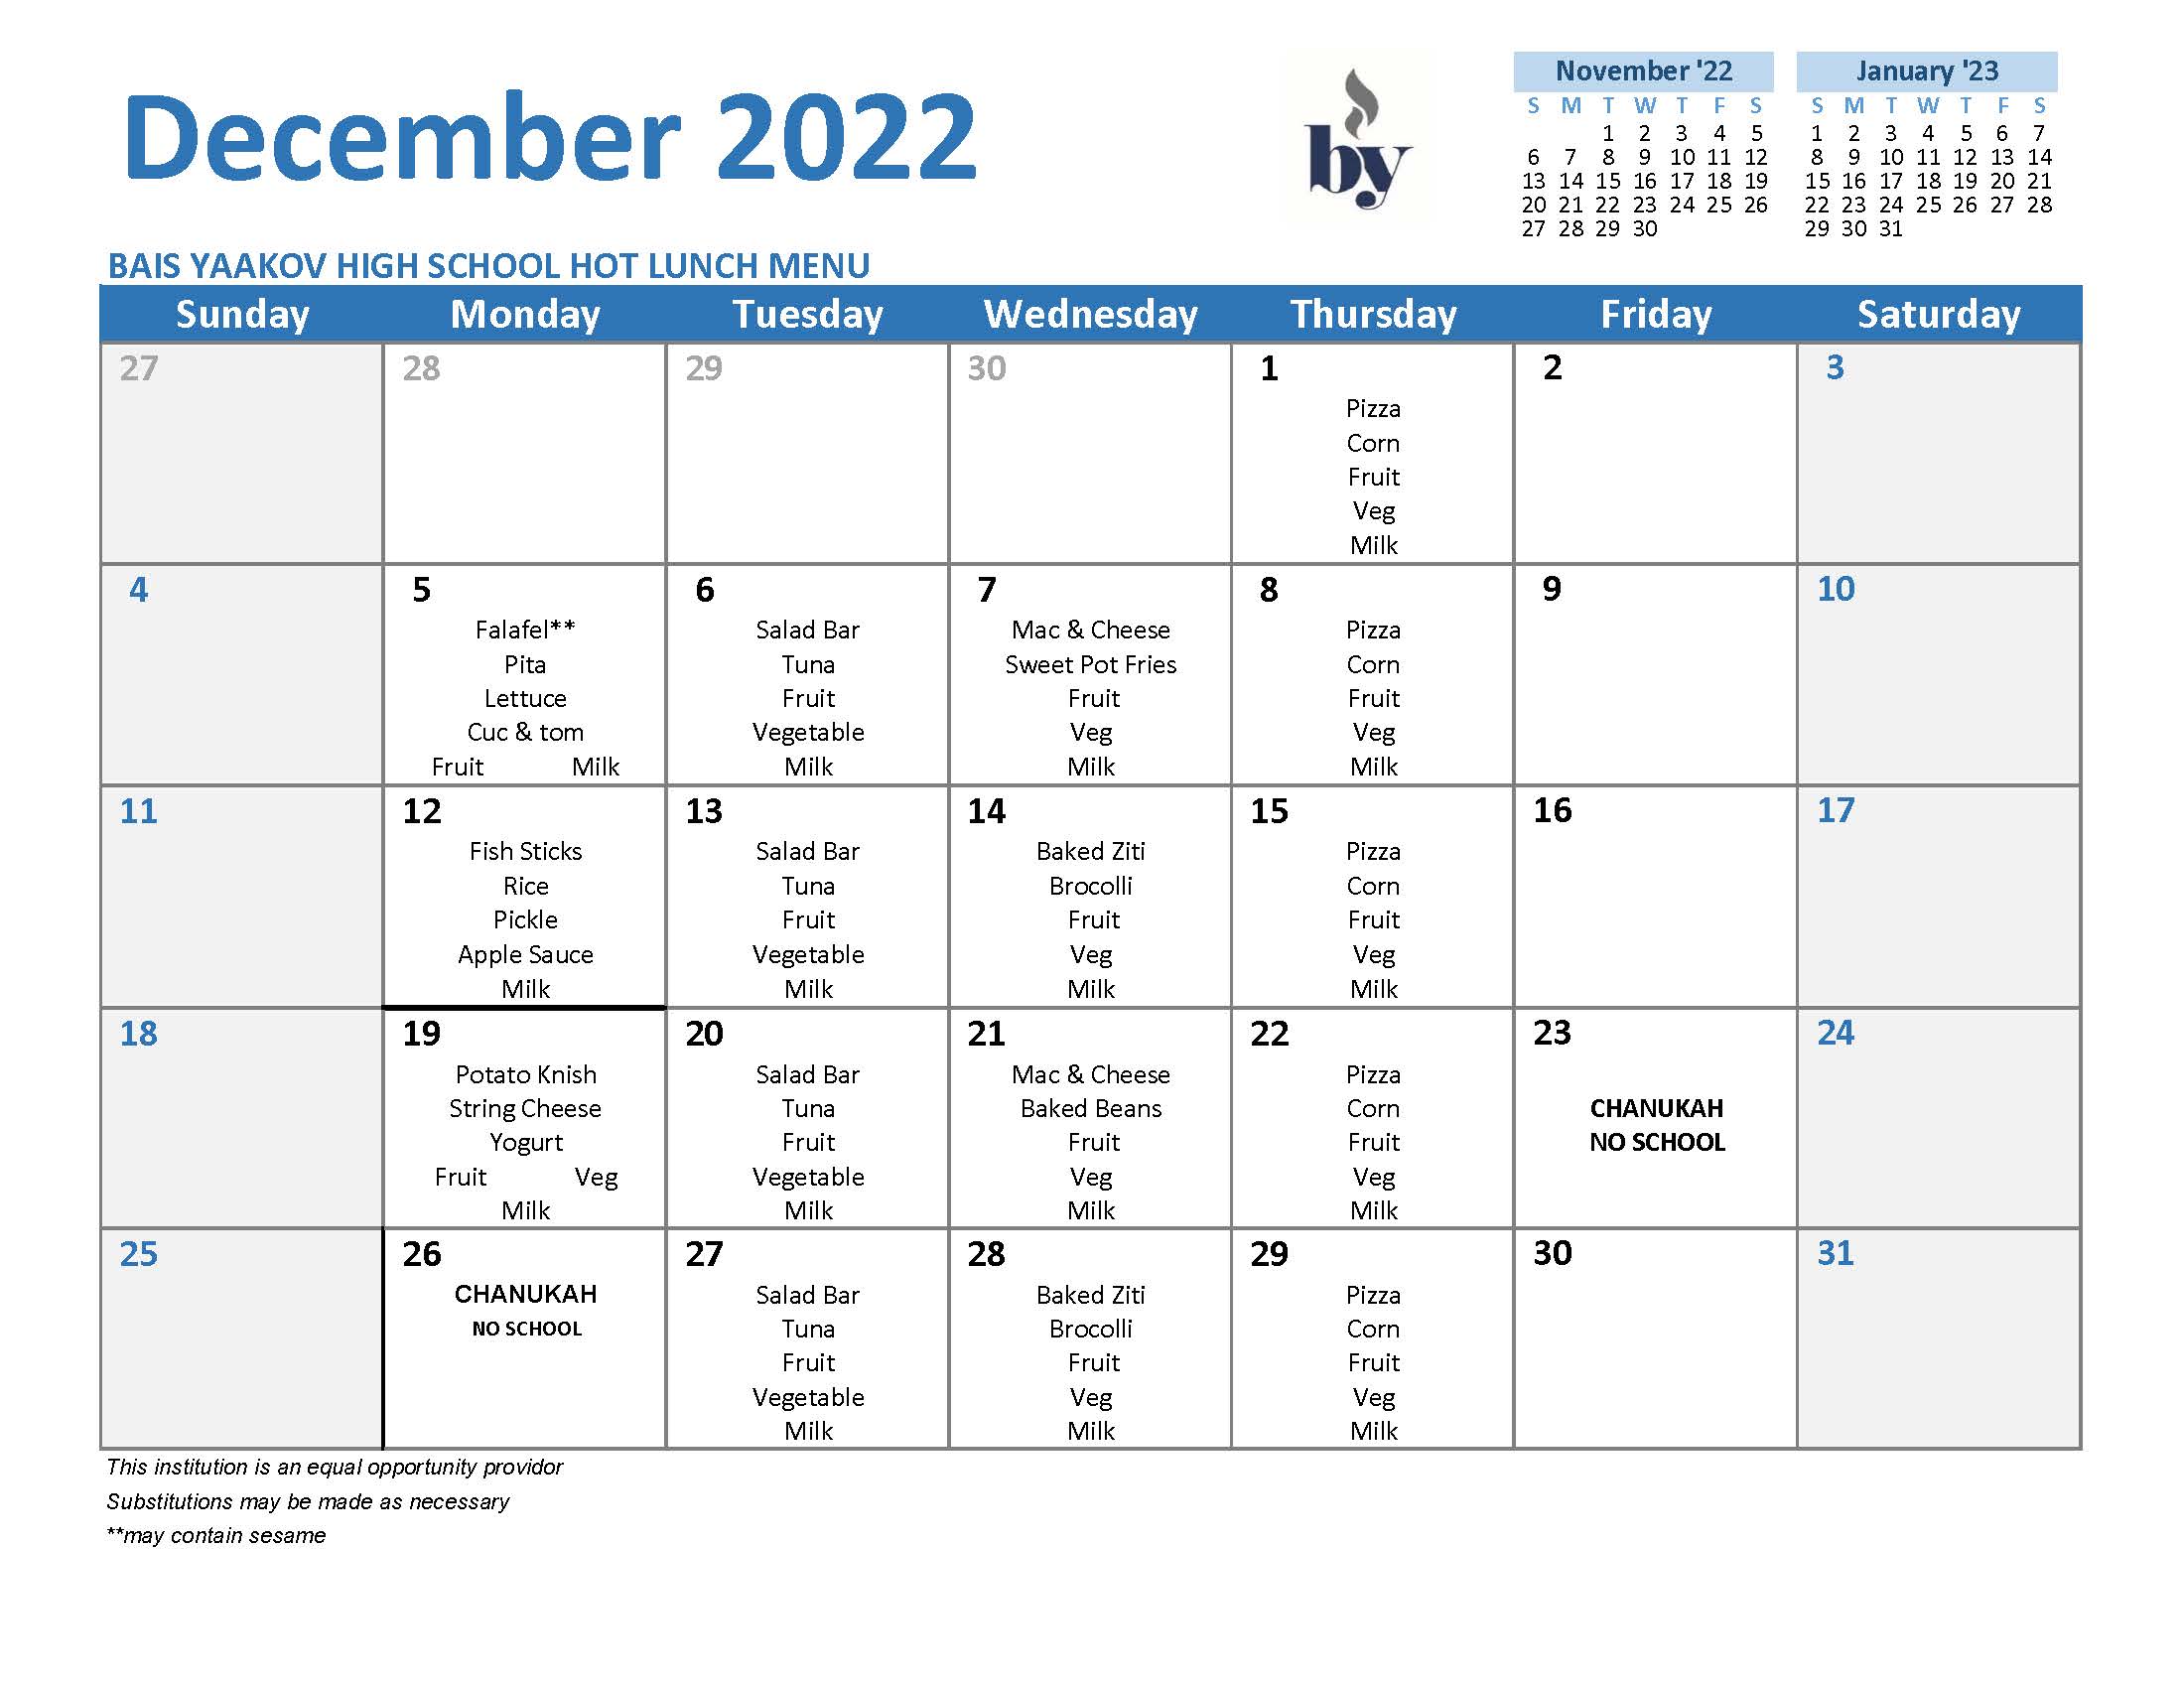 High School Menu - December 2022